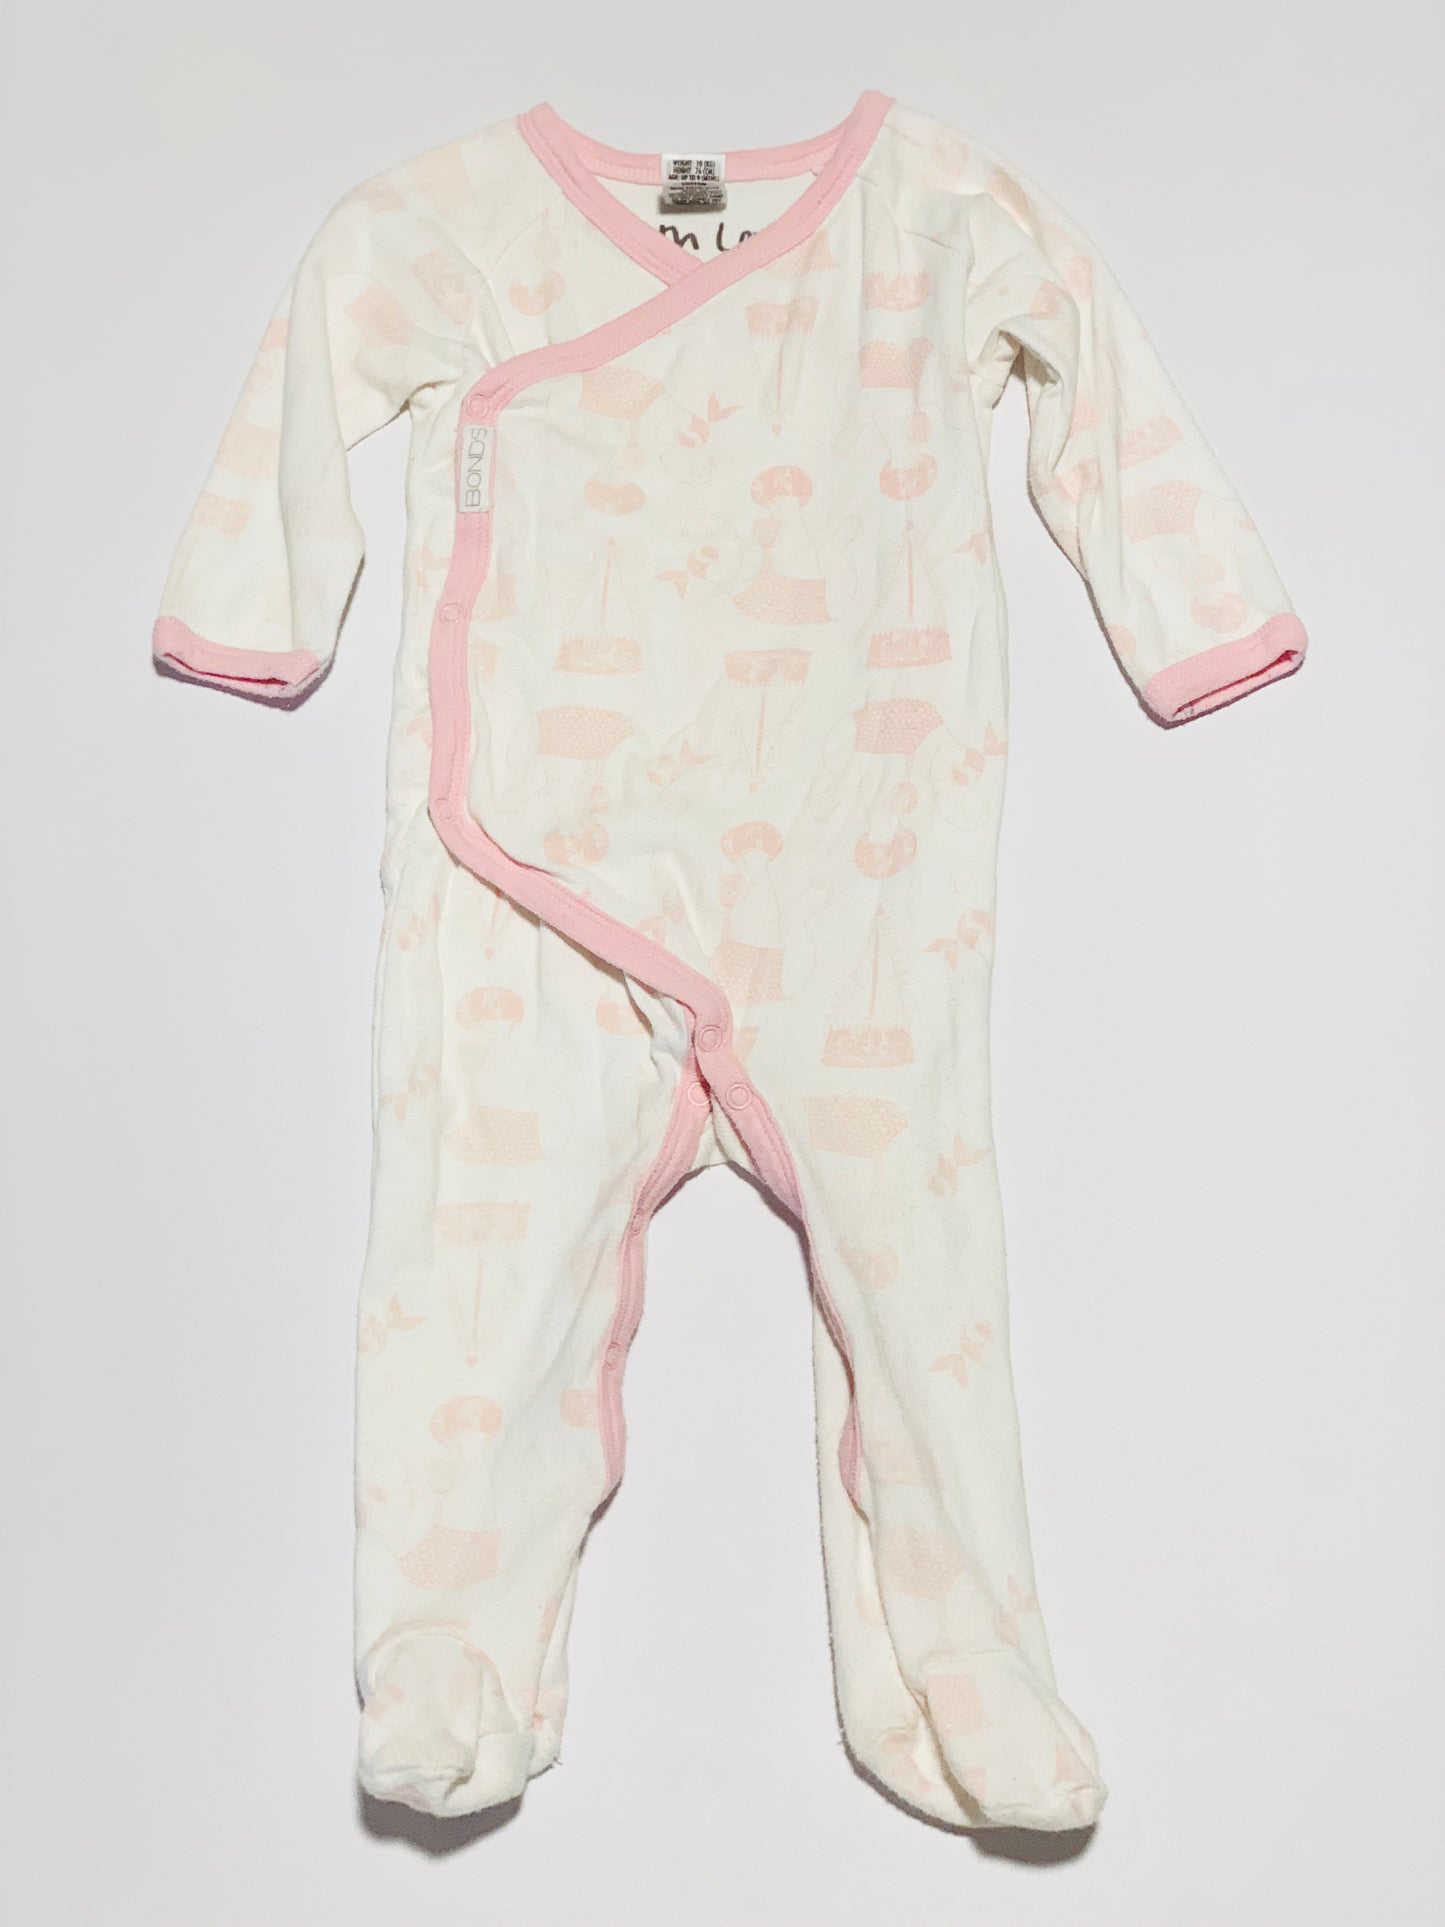 Pink elephant onesie - Size 0